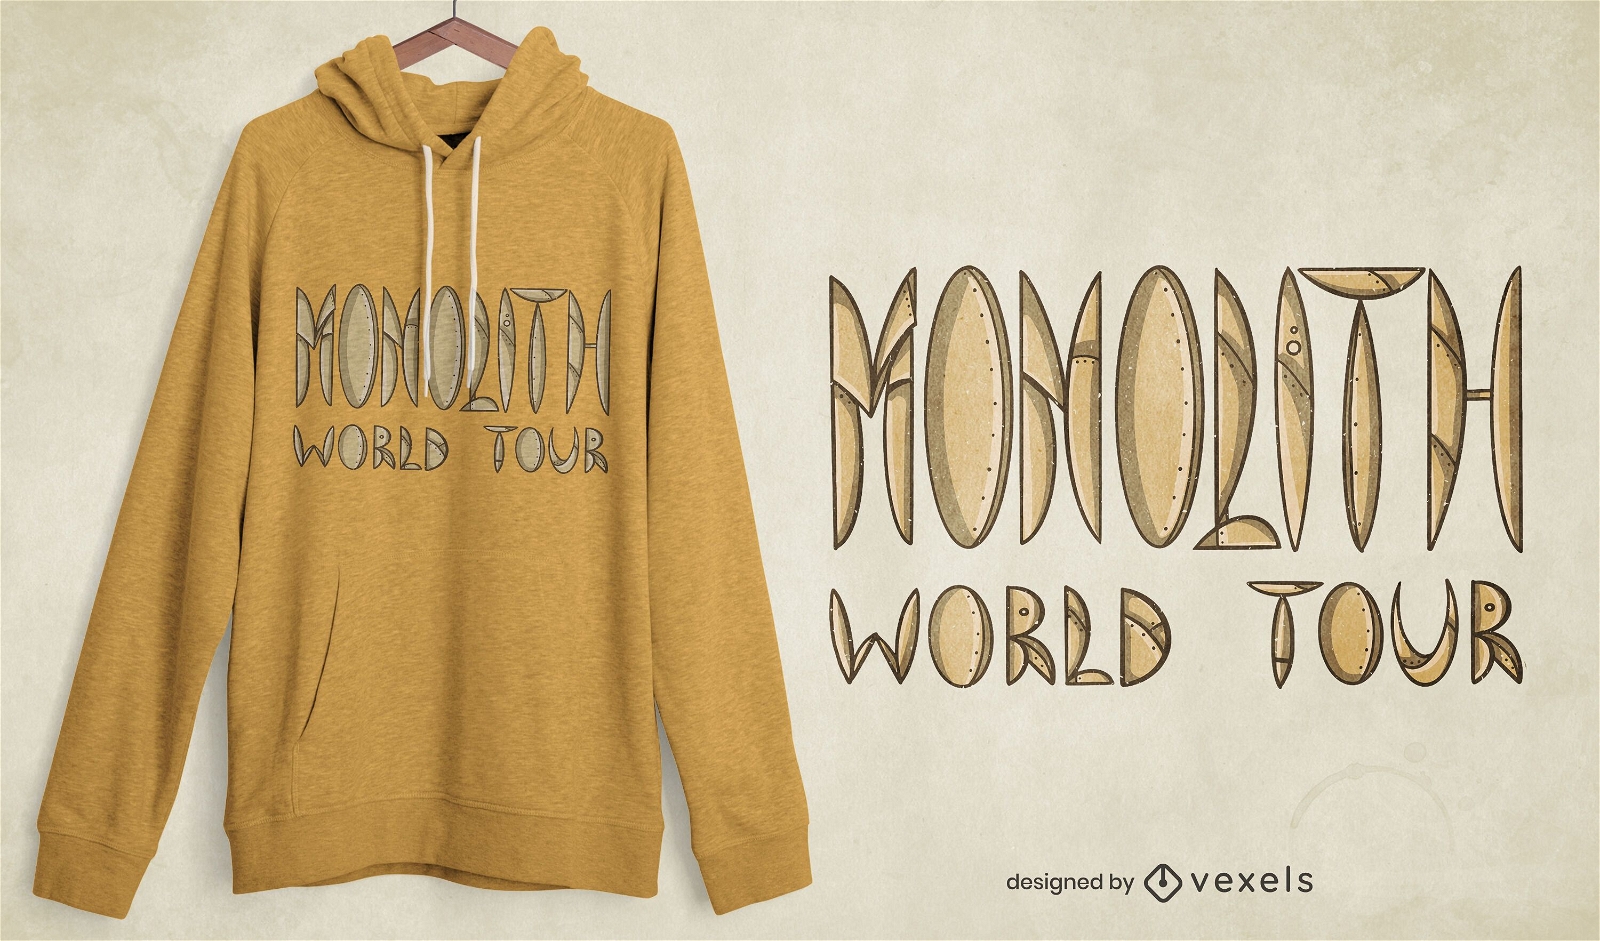 Monolith world tour t-shirt design